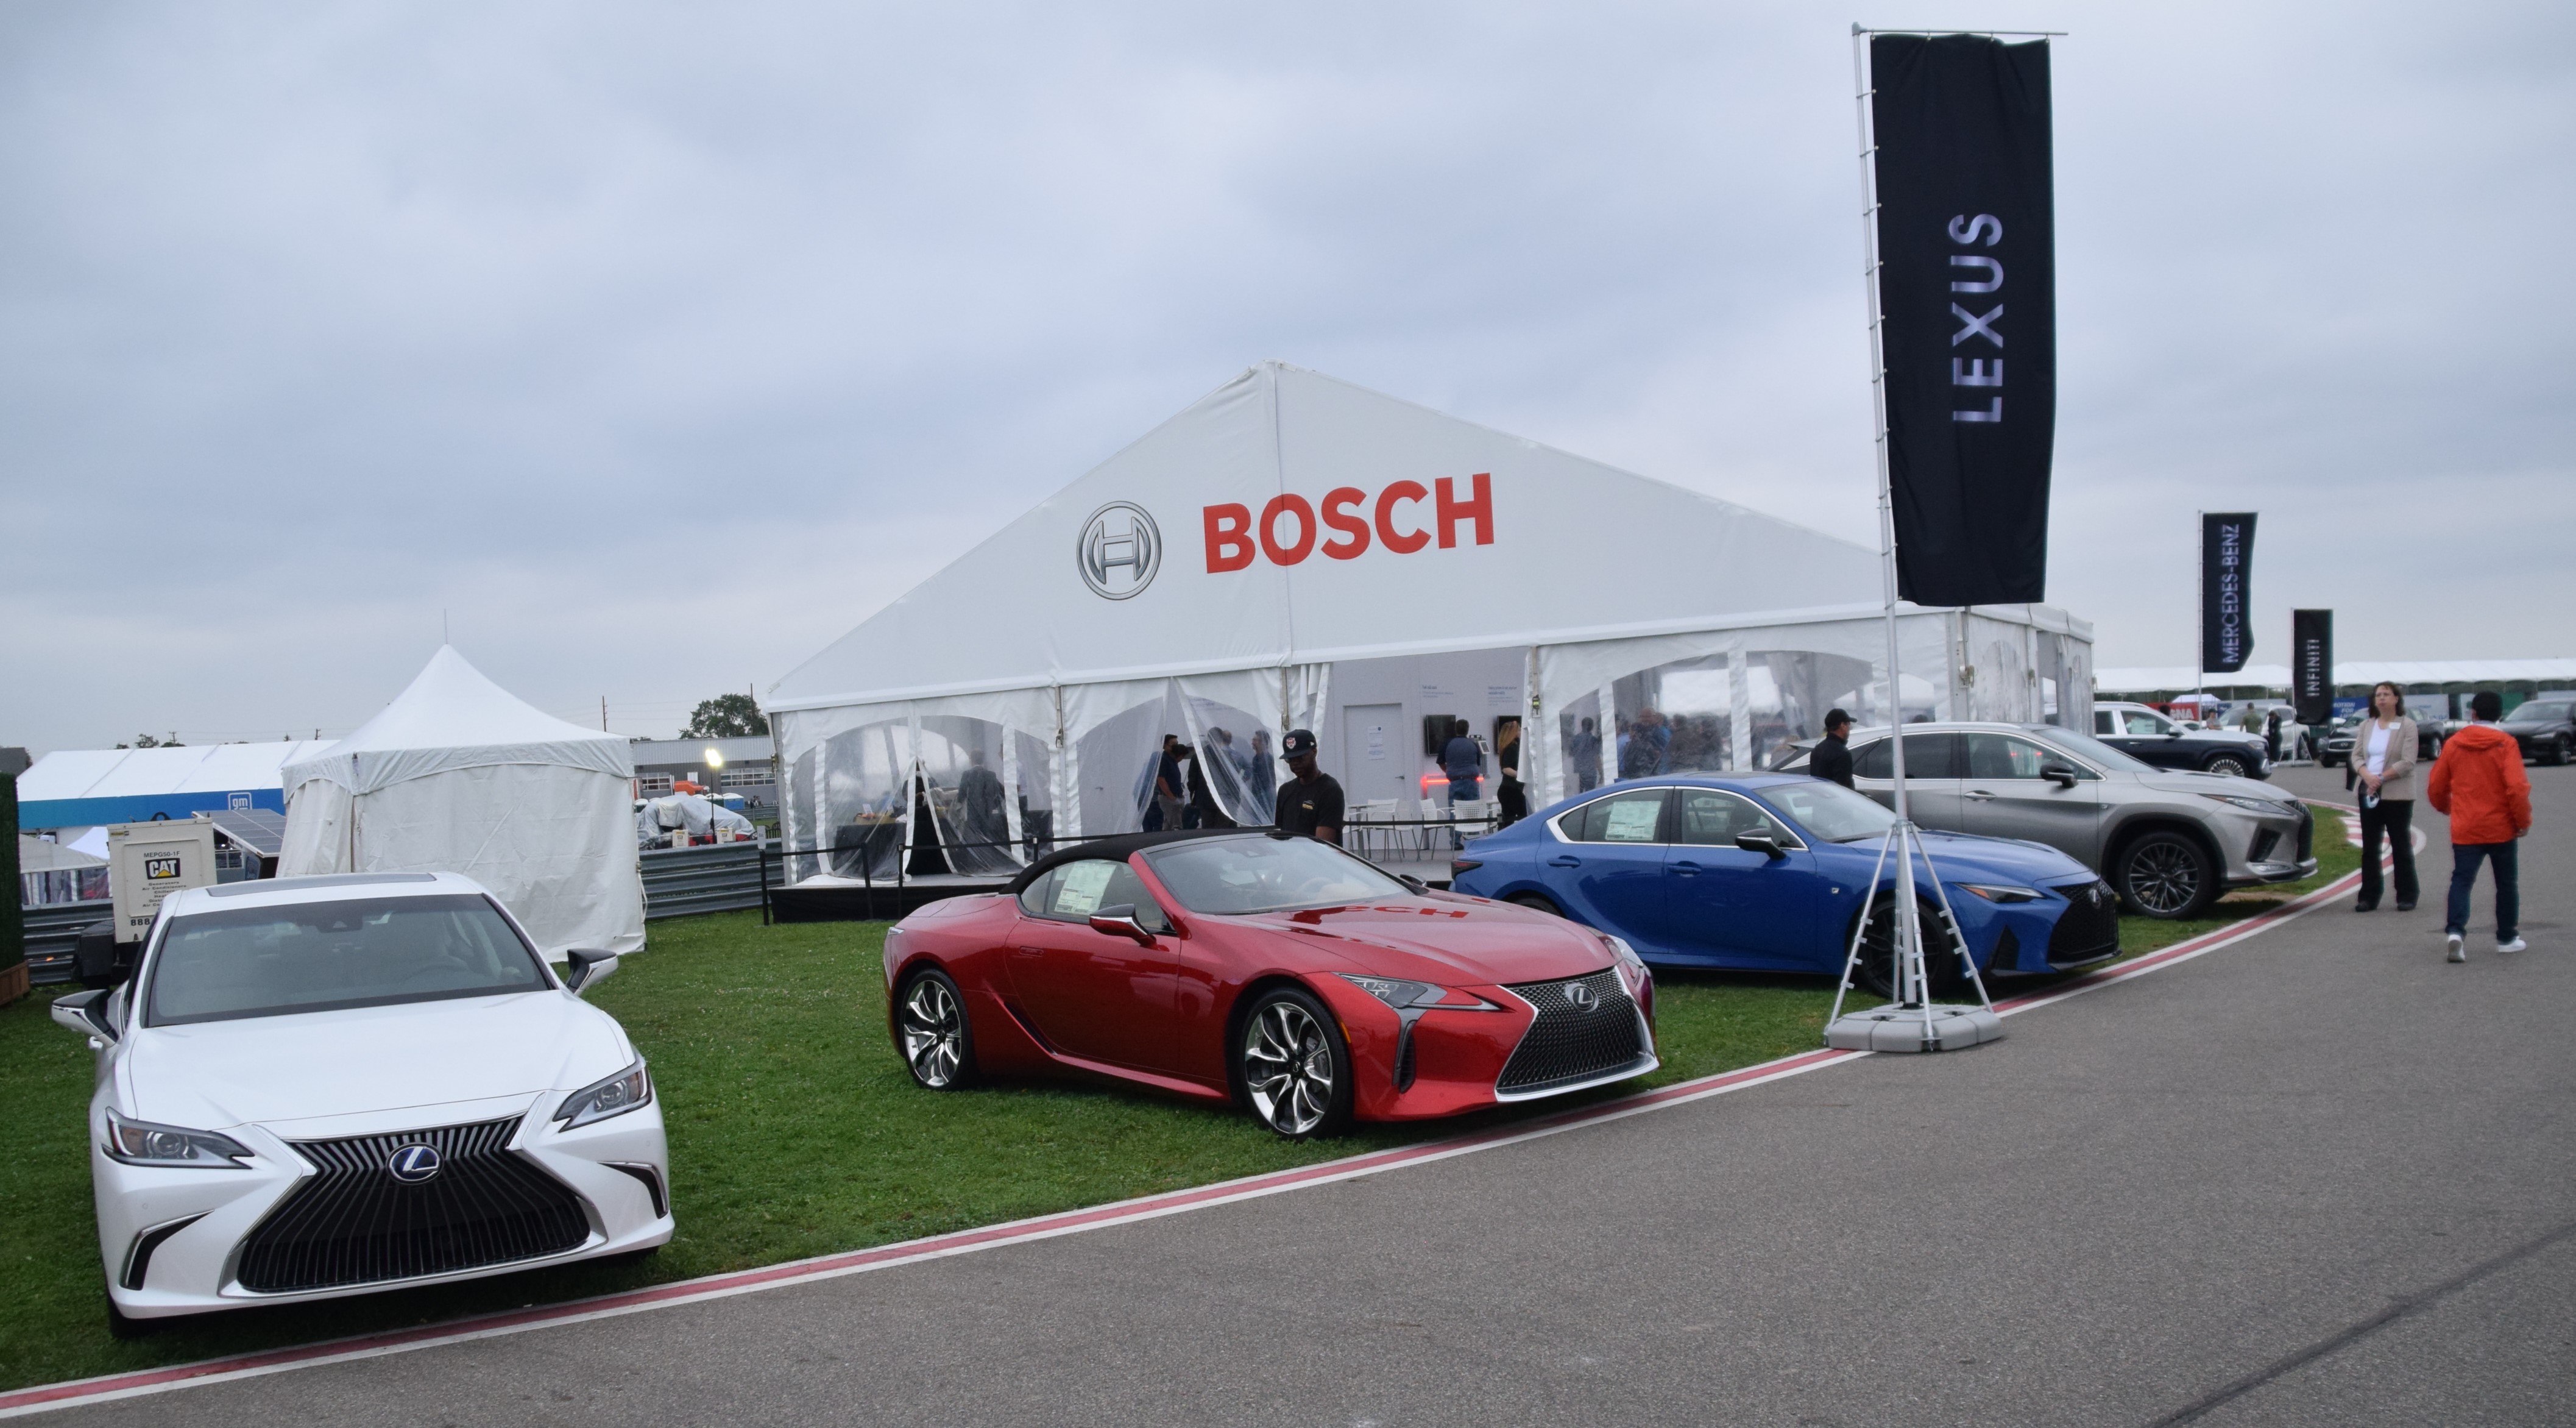 Bosch tent - Copy.JPG